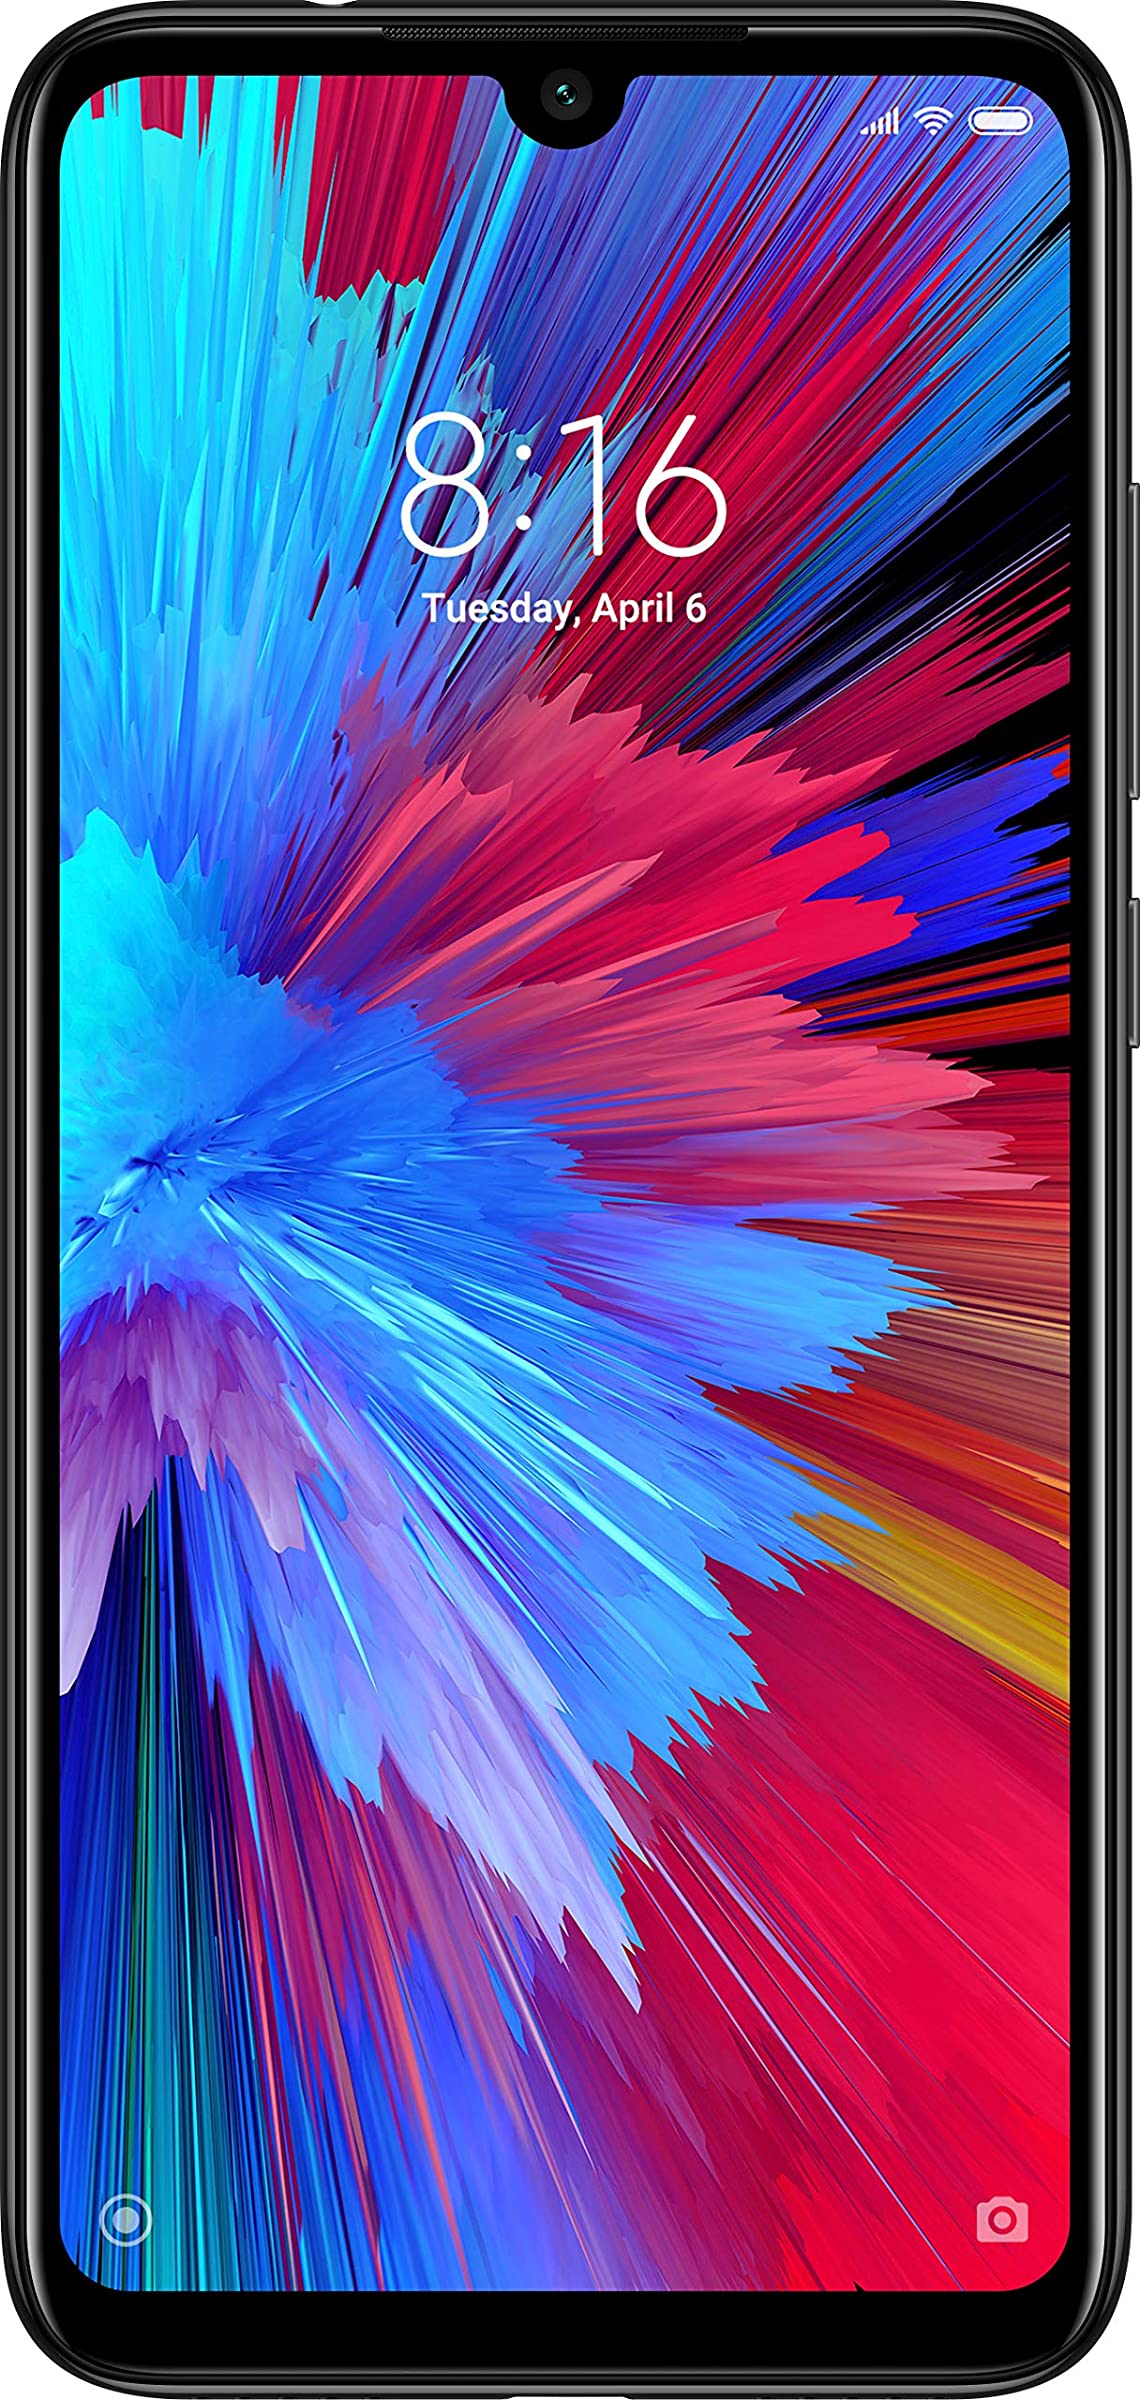 Xiaomi Redmi Note 7 3GB 32GB (Onyx Black) 